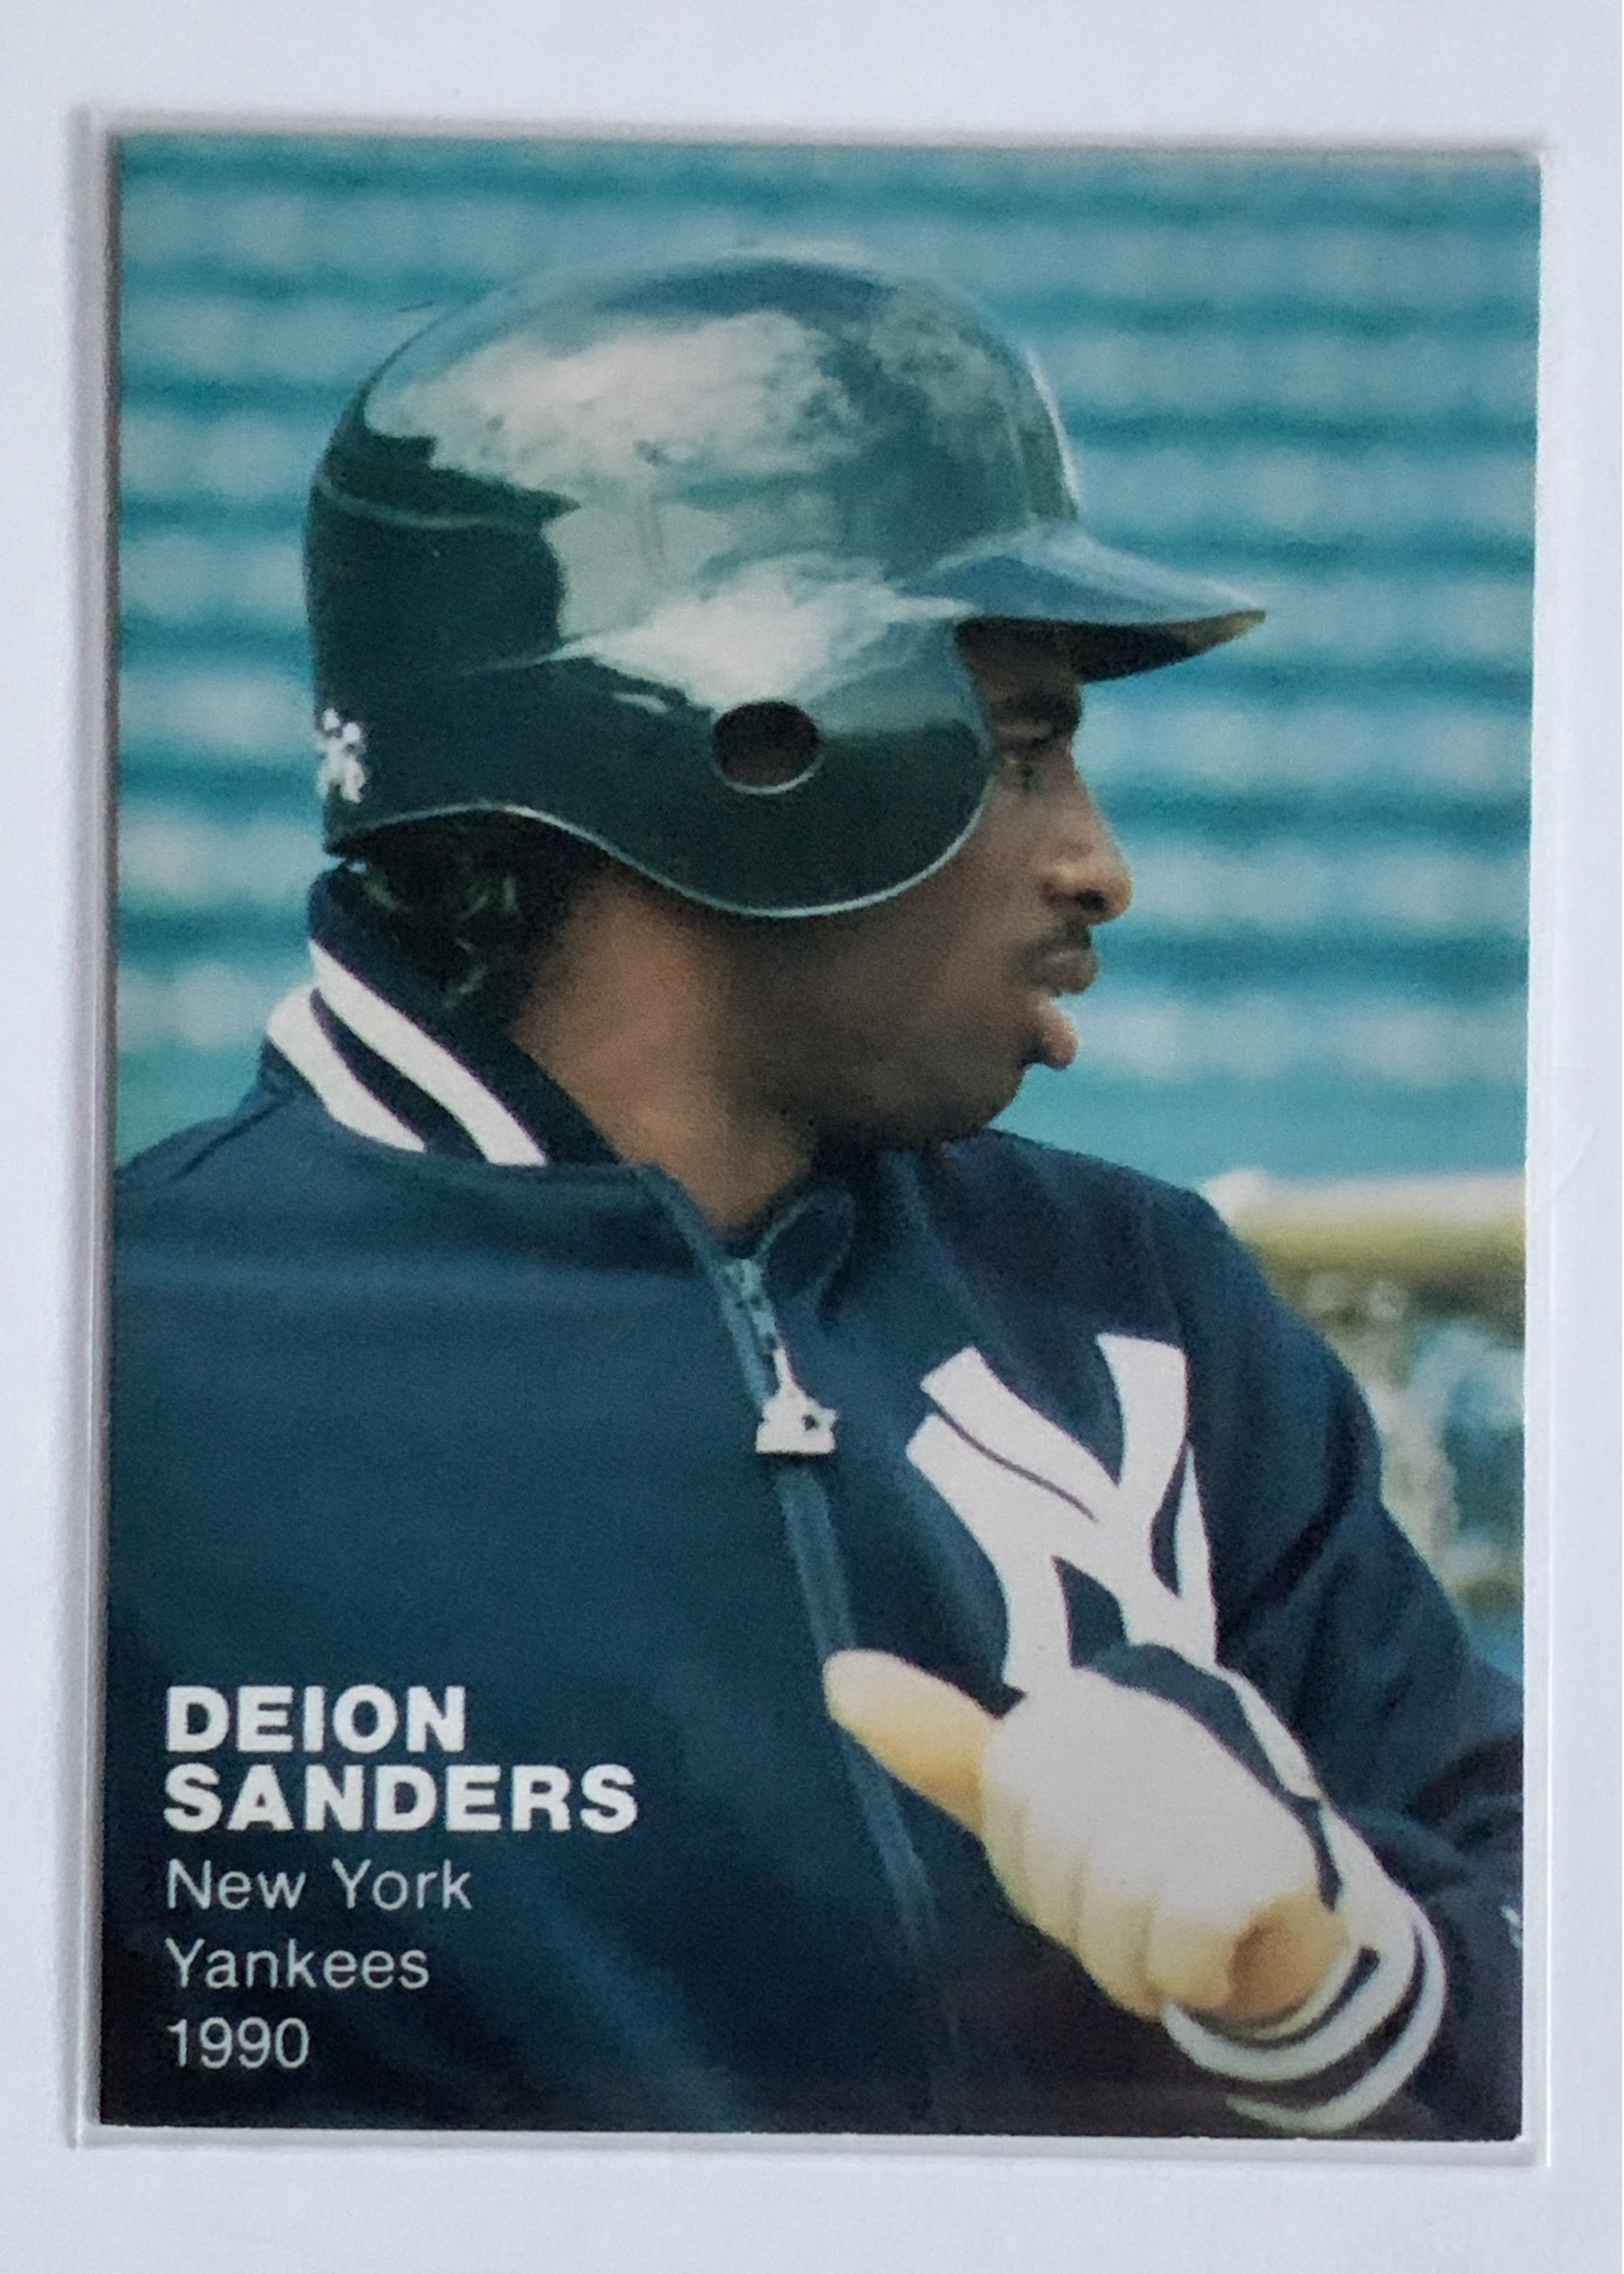  Deion Sanders baseball card (New York Yankees) 1990